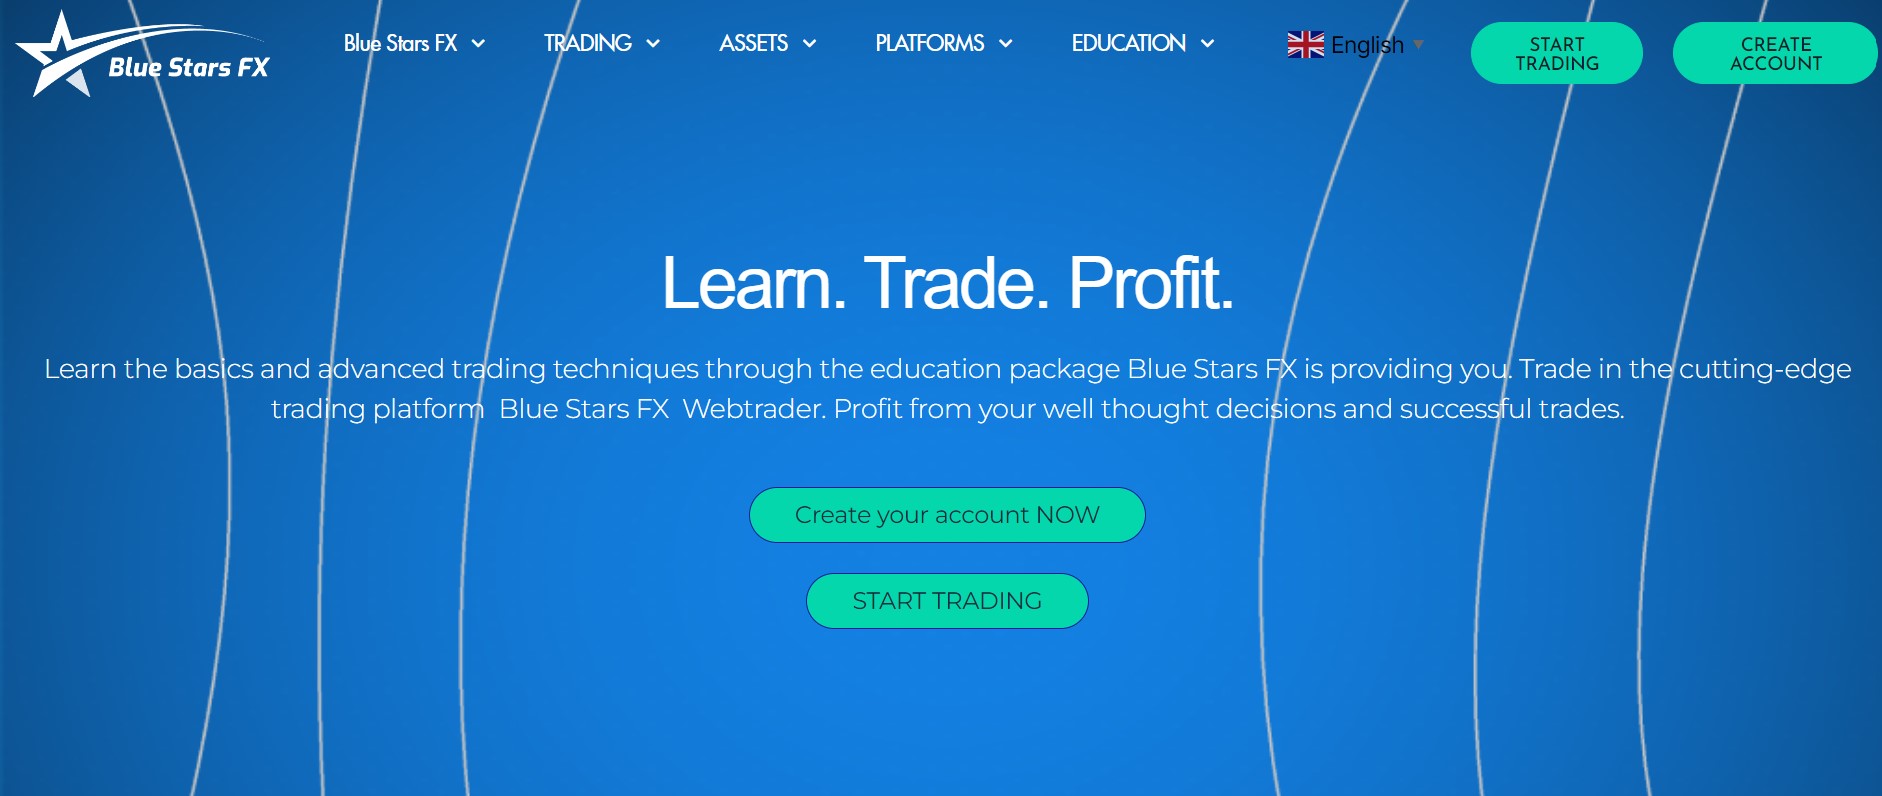 Blue Stars FX website